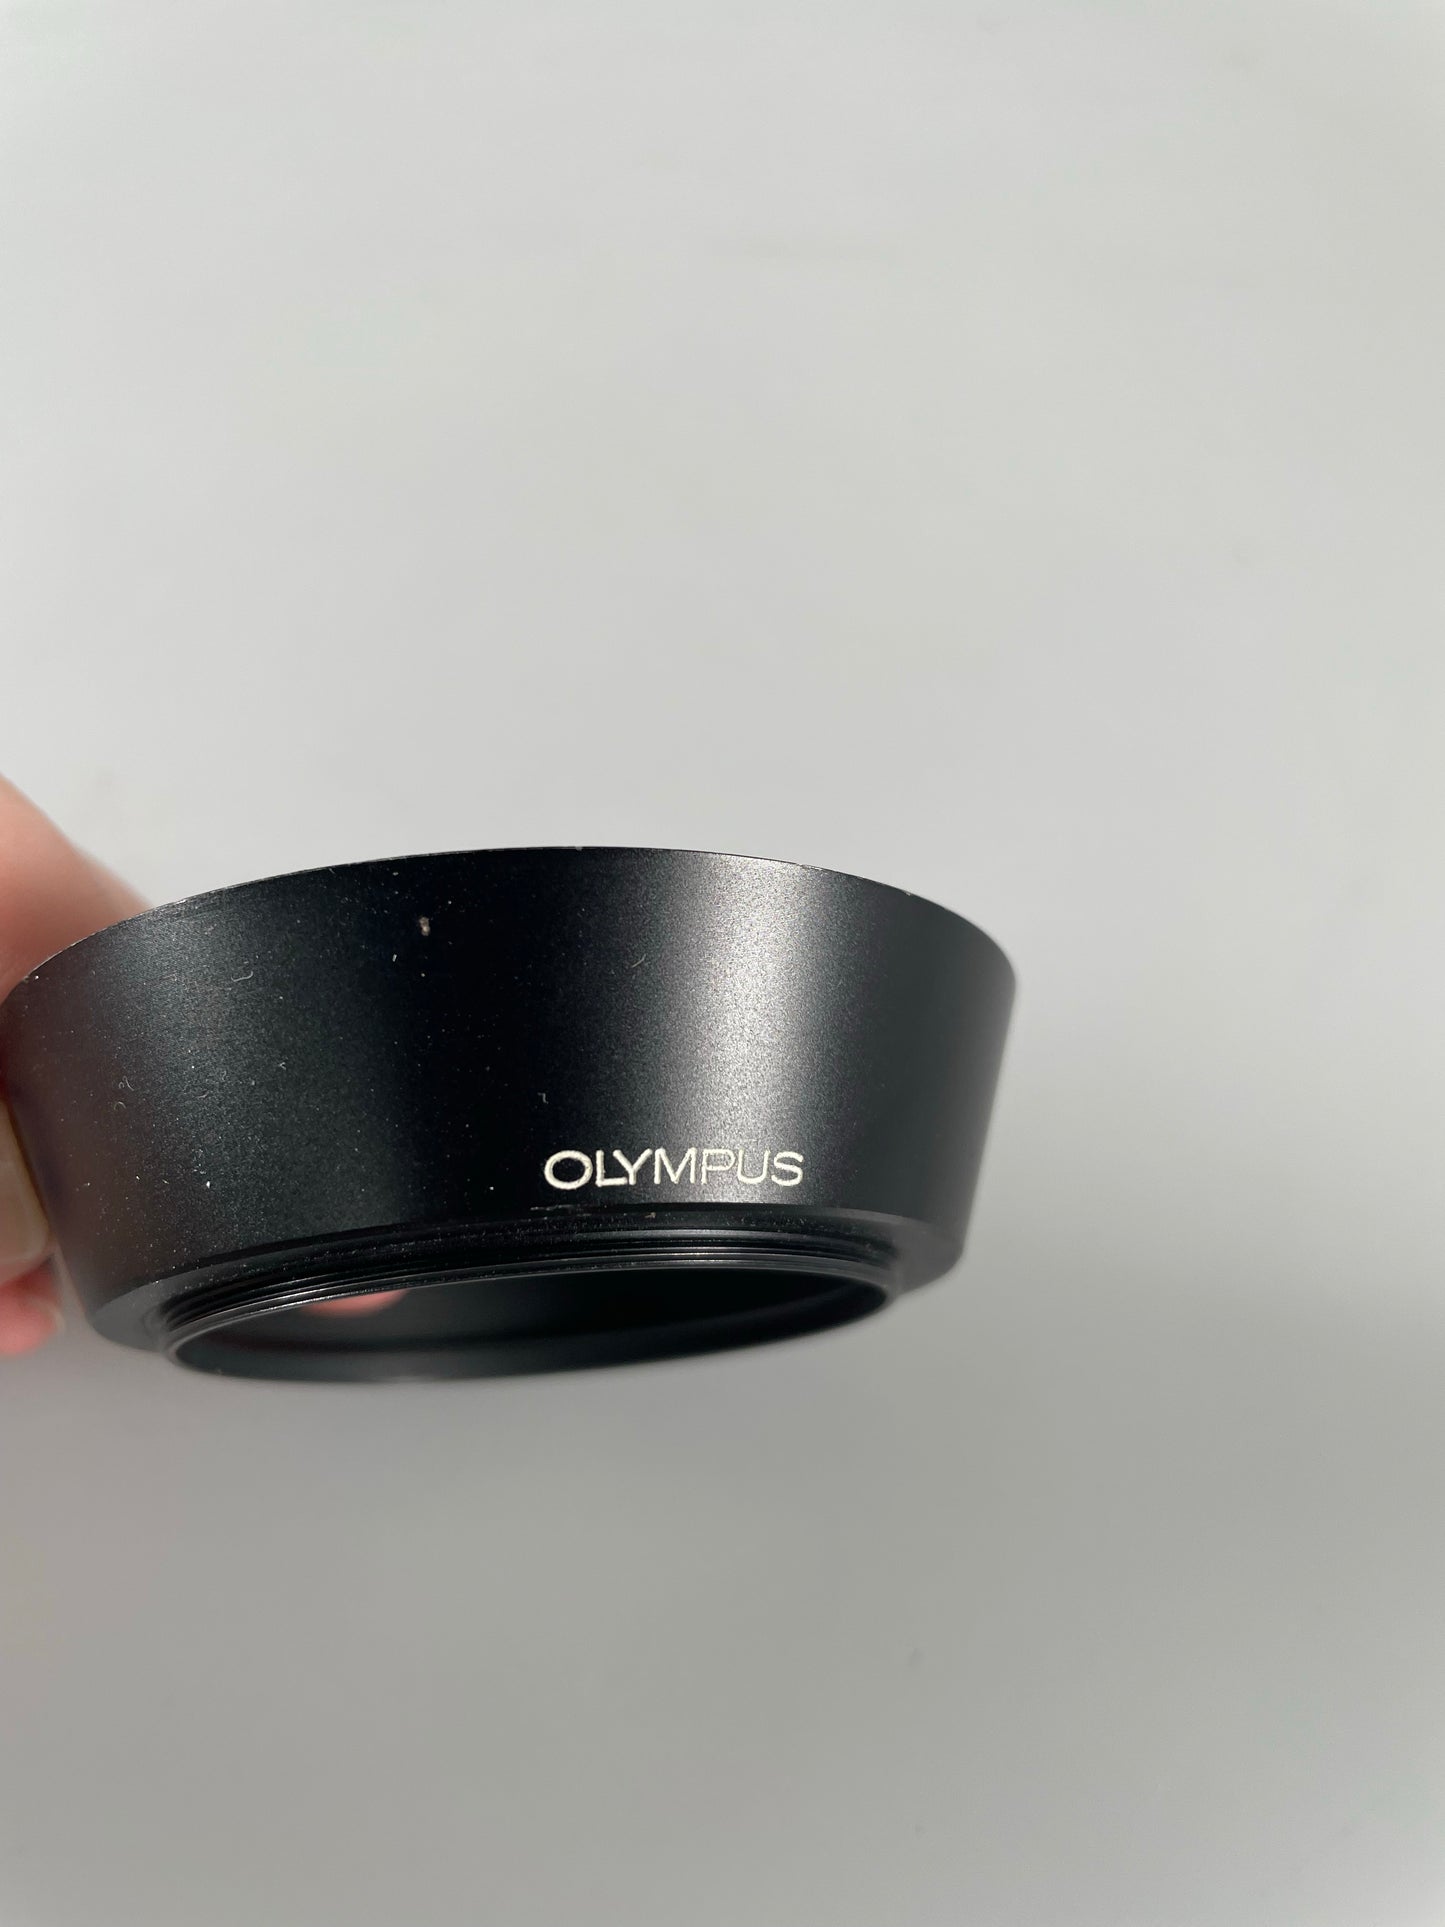 Olympus 3.5/28 Metal Lens Hood For 28mm f3.5 Lenses, 49mm Thread Fit